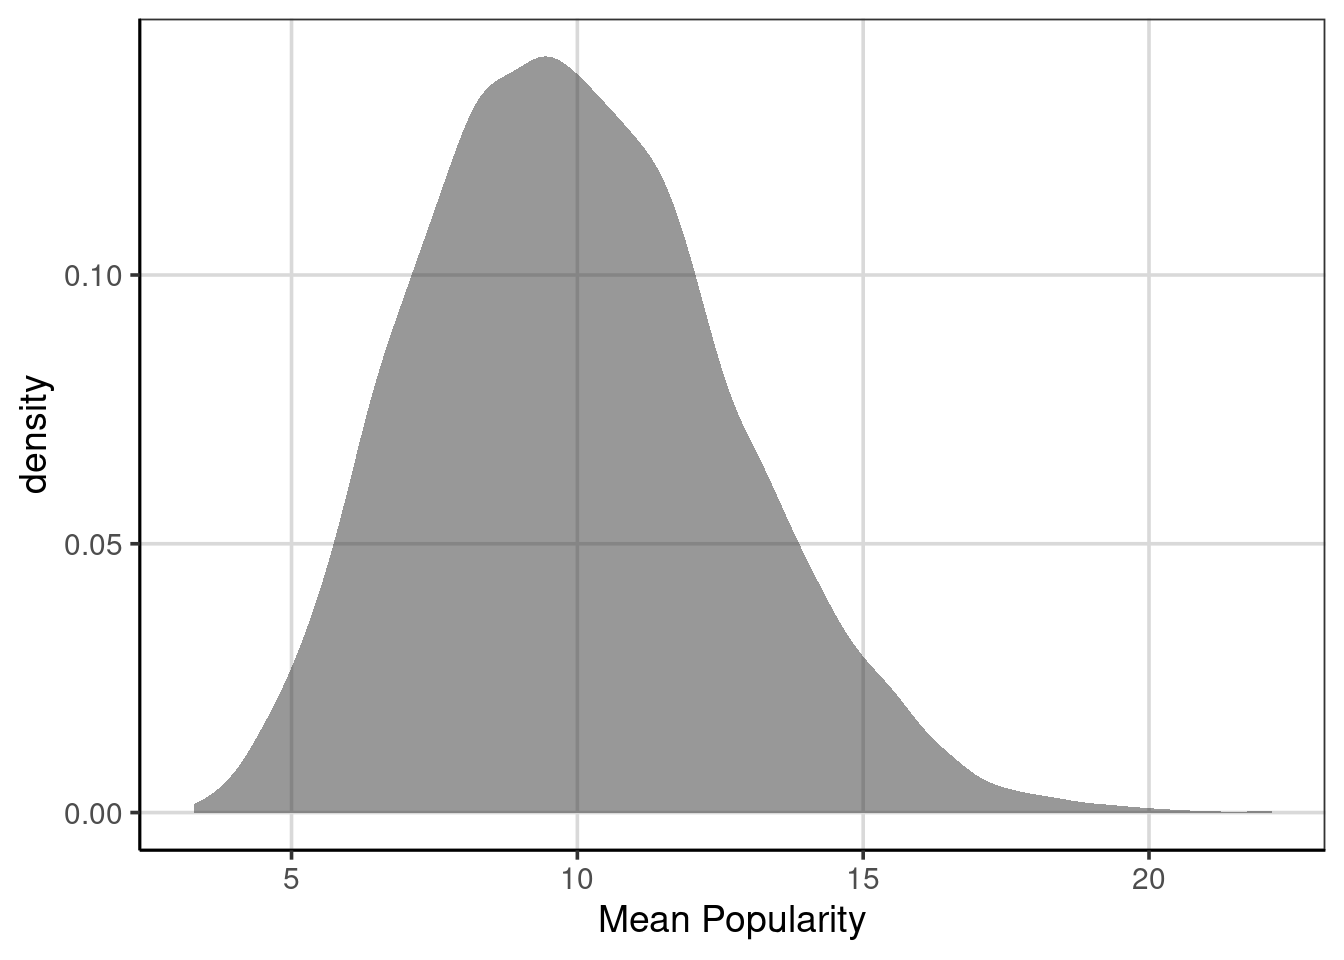 Density curve of the mean fruit popularity based on 10,000 resampled data sets.